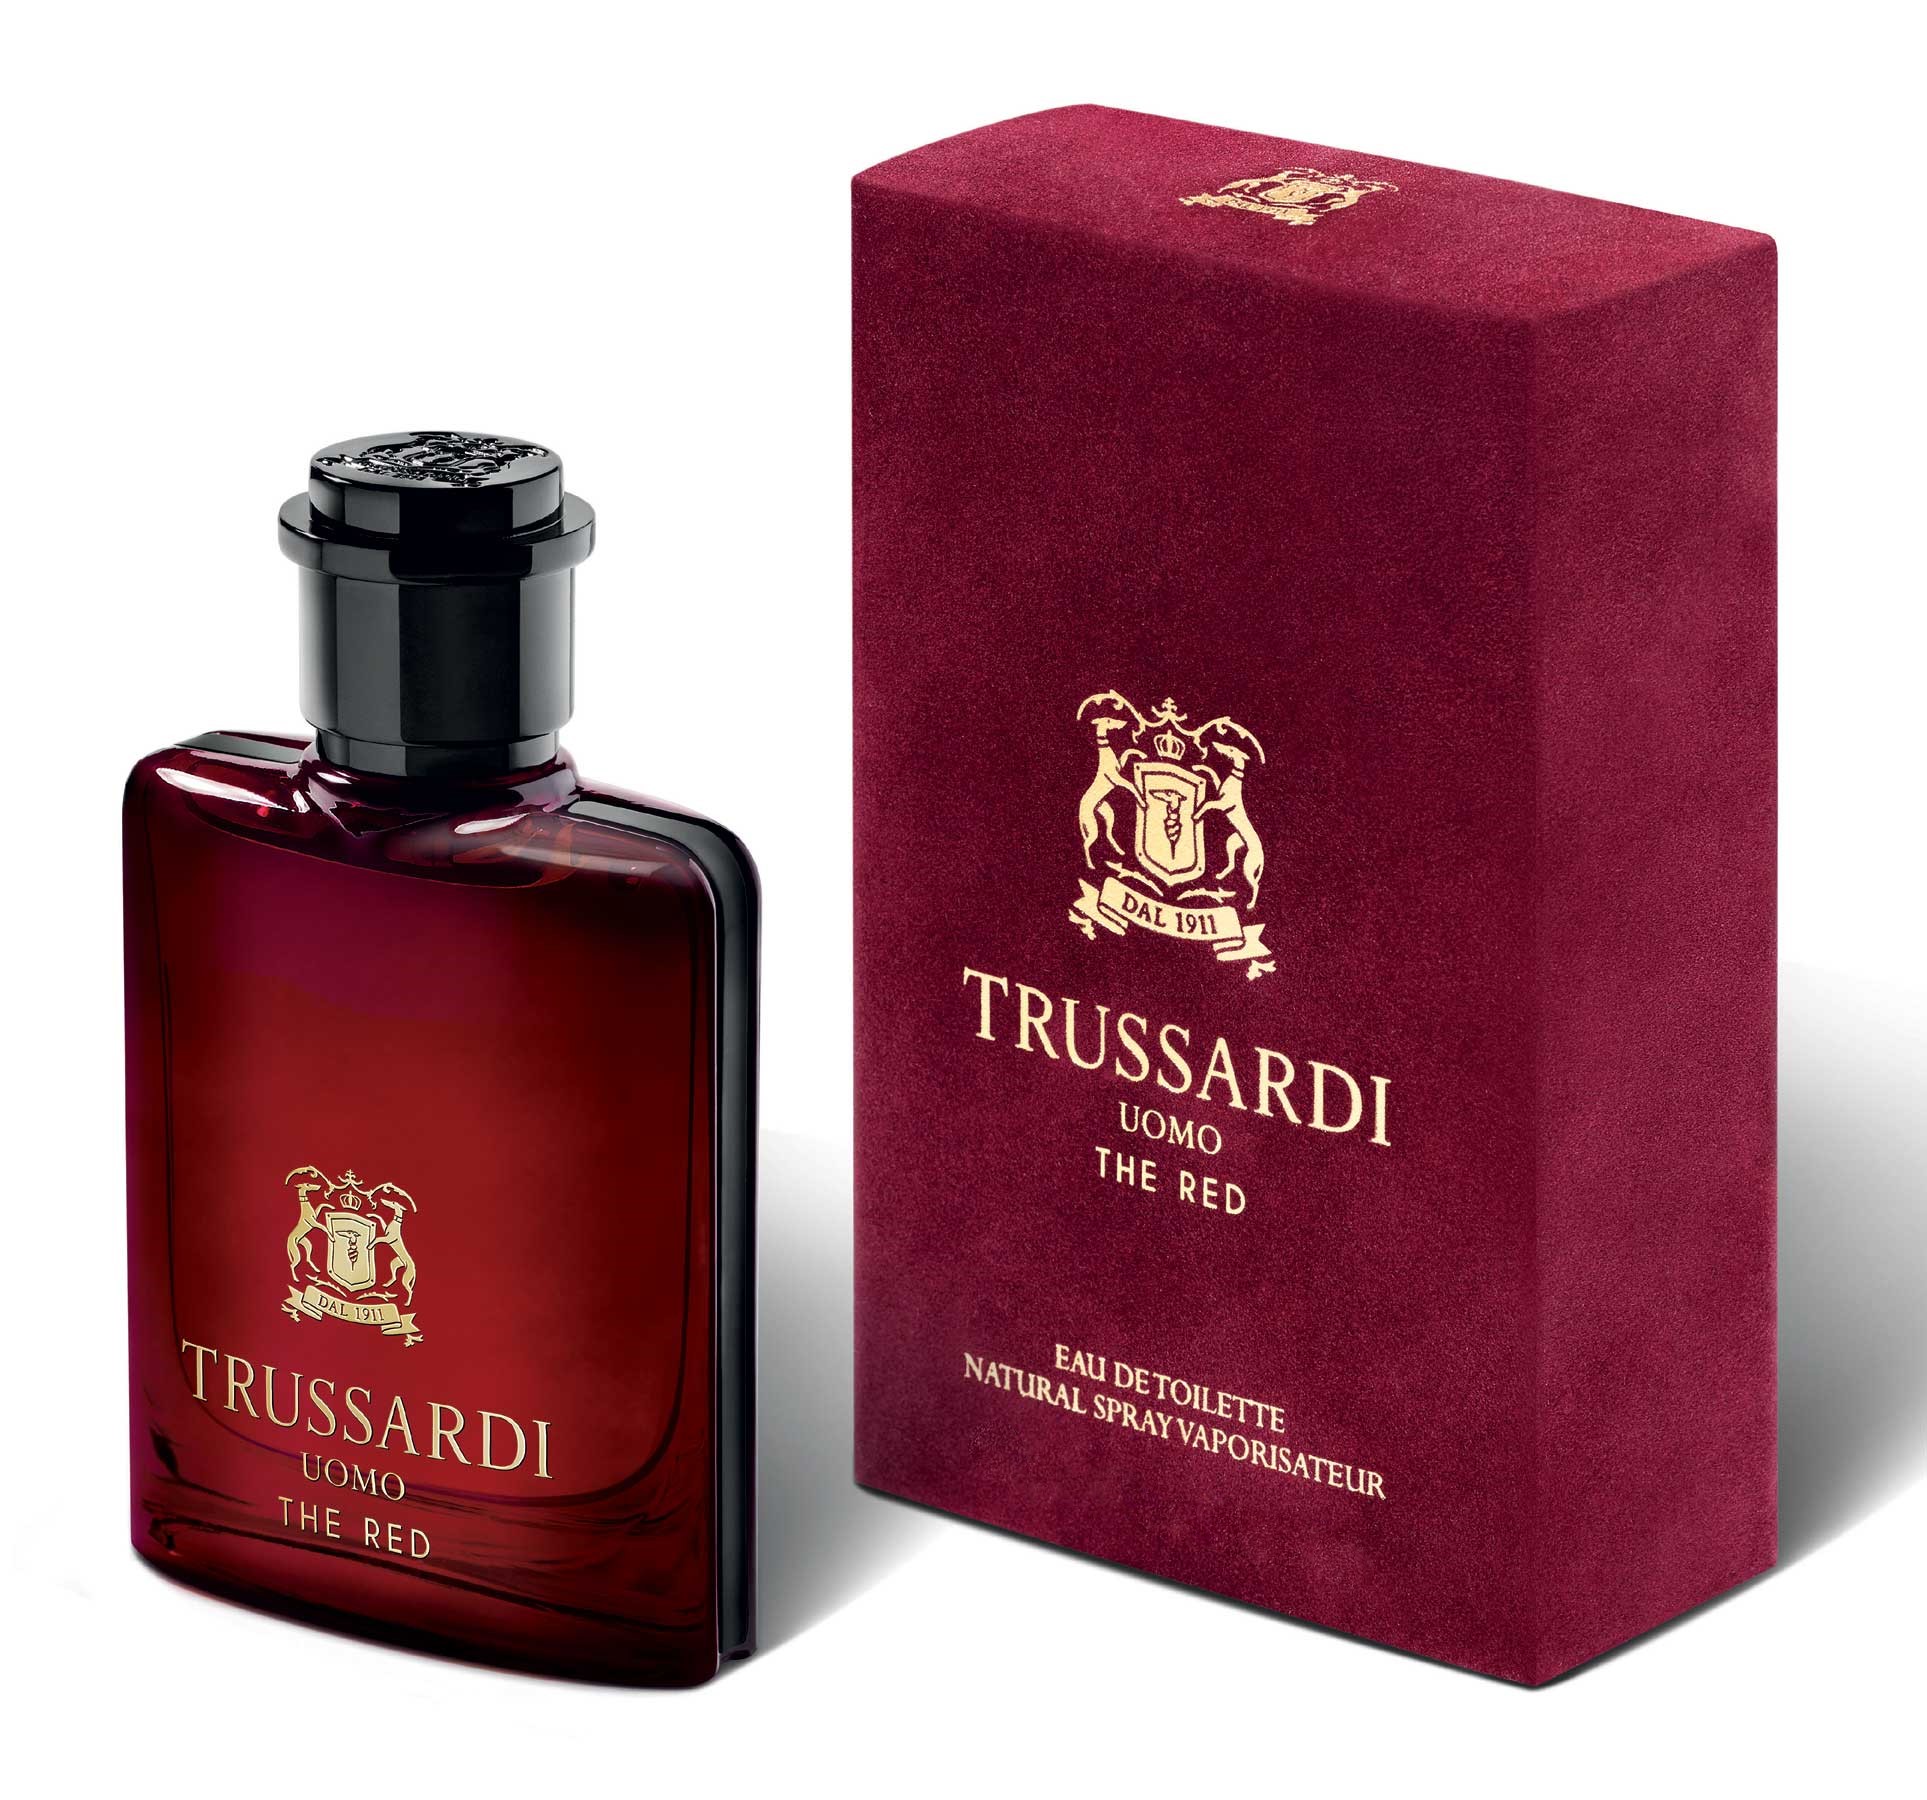 Купить Туалетная вода Trussardi, Trussardi Uomo The Red 30.0ml, Италия